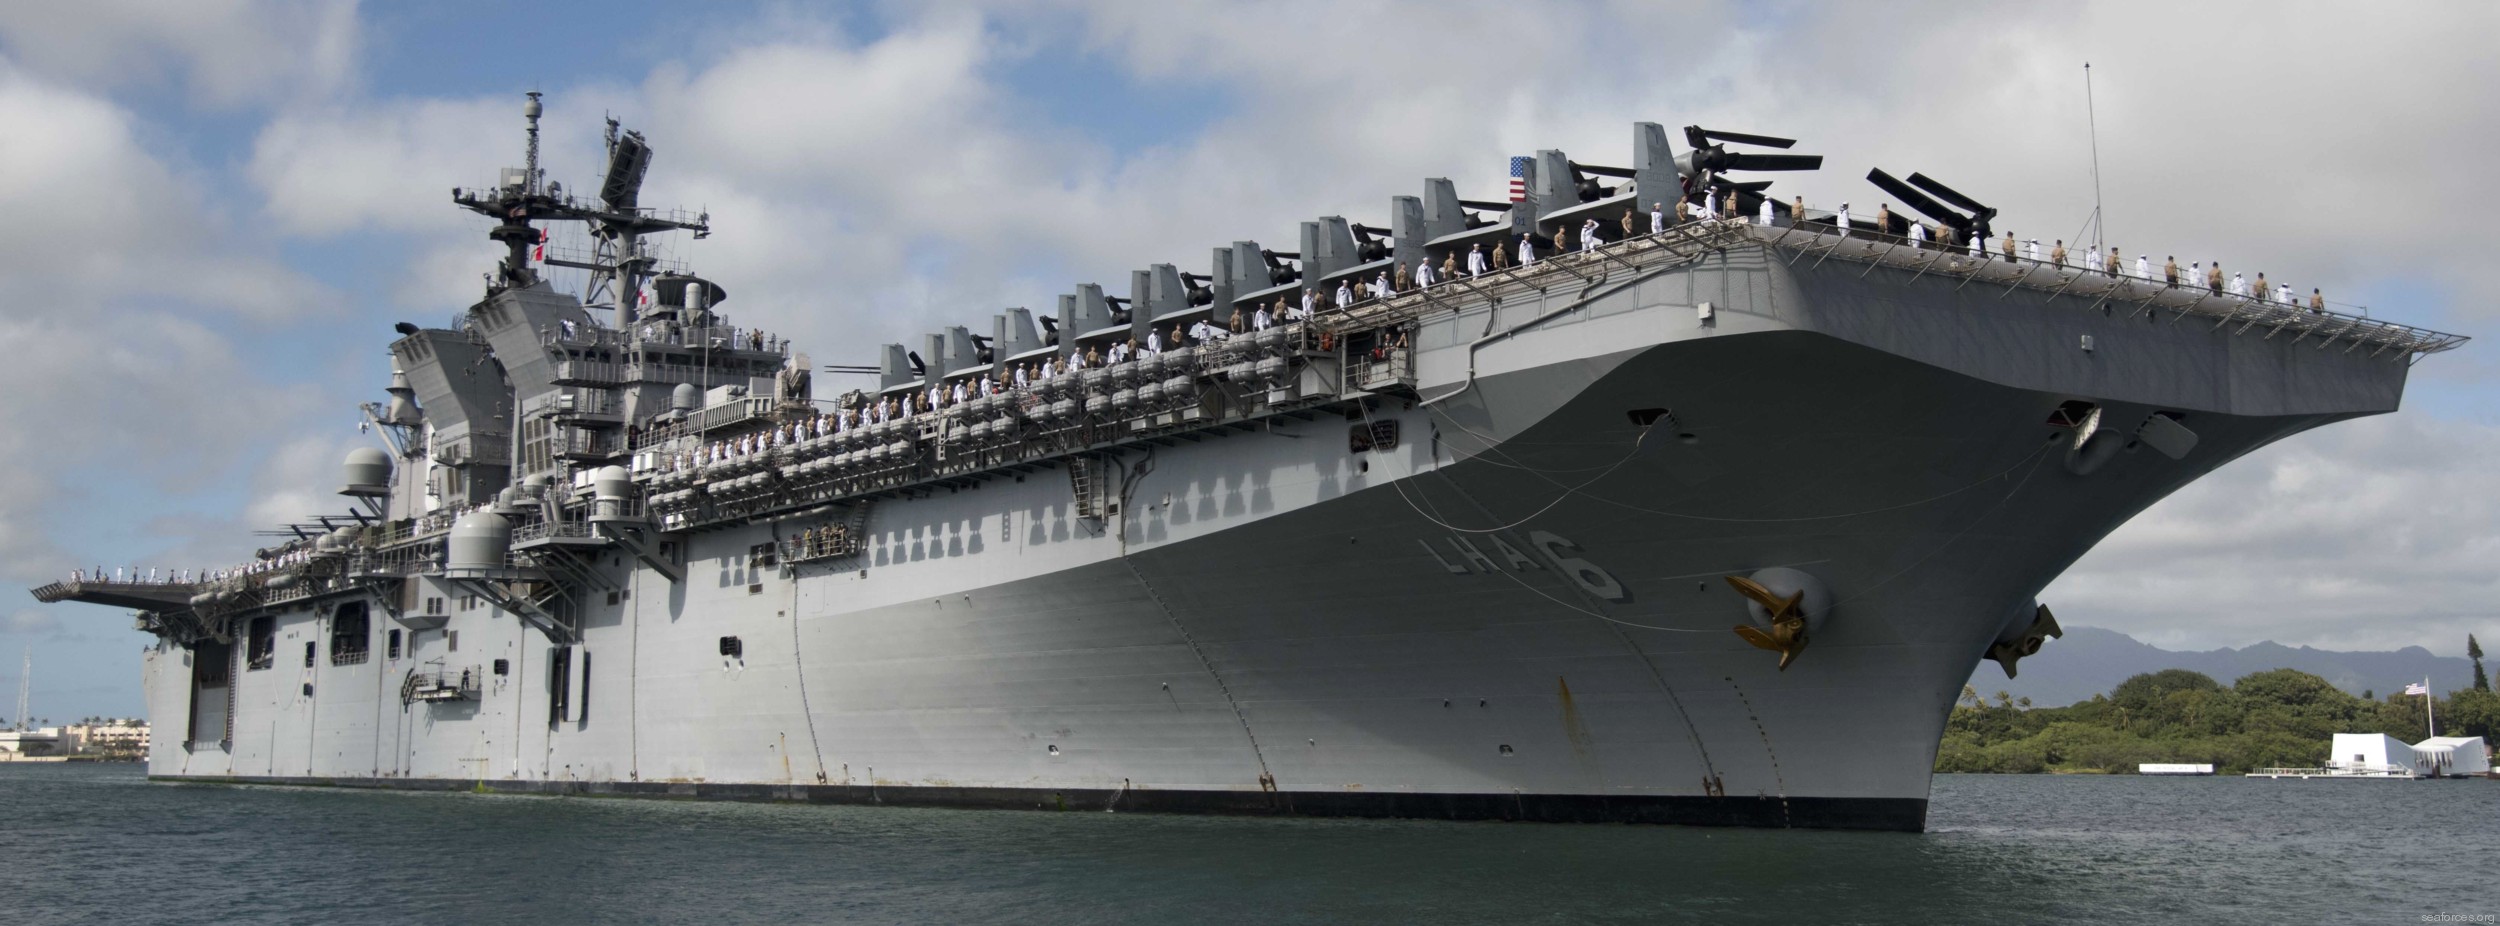 lha-6 uss america amphibious assault ship us navy 23 joint base pearl harbor hickam hawaii